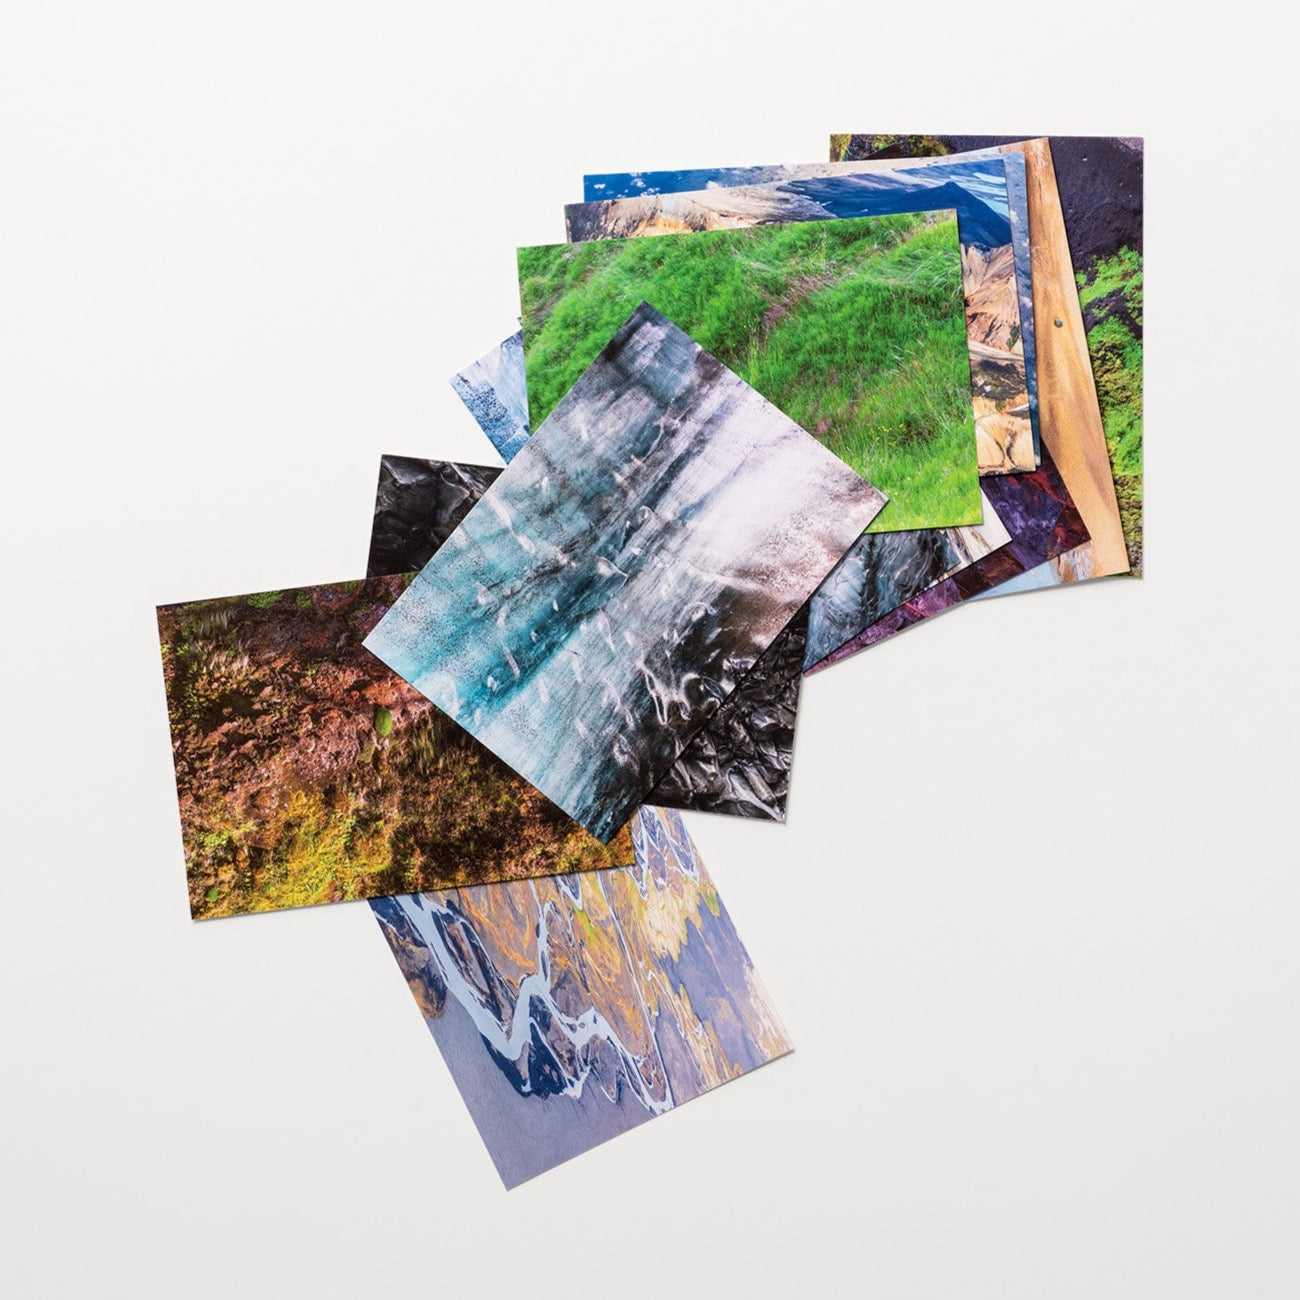 THE ISLAND – Postkarten (10 Stück)